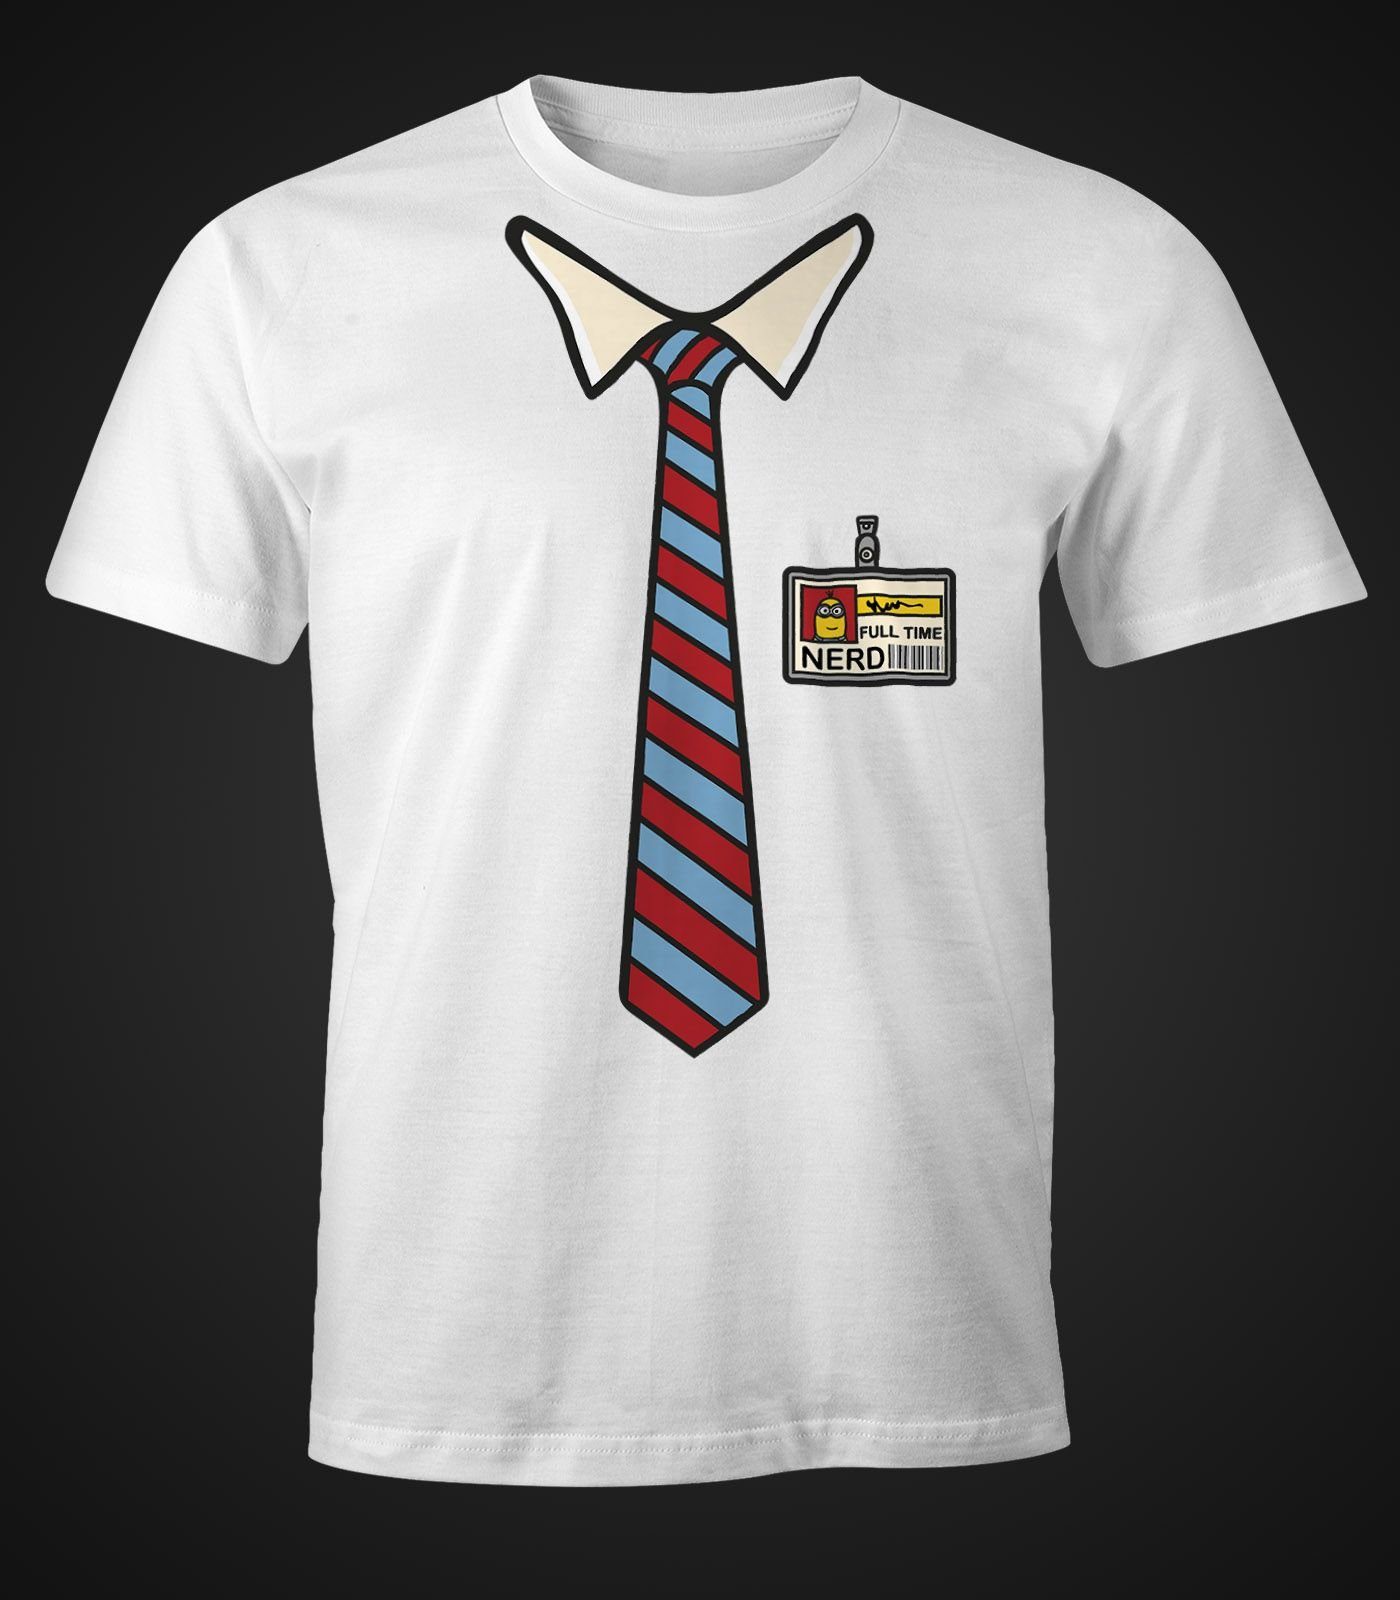 Time Print Herren Moonworks® Geek Fun-Shirt Print-Shirt mit Full Nerd MoonWorks weiß T-Shirt